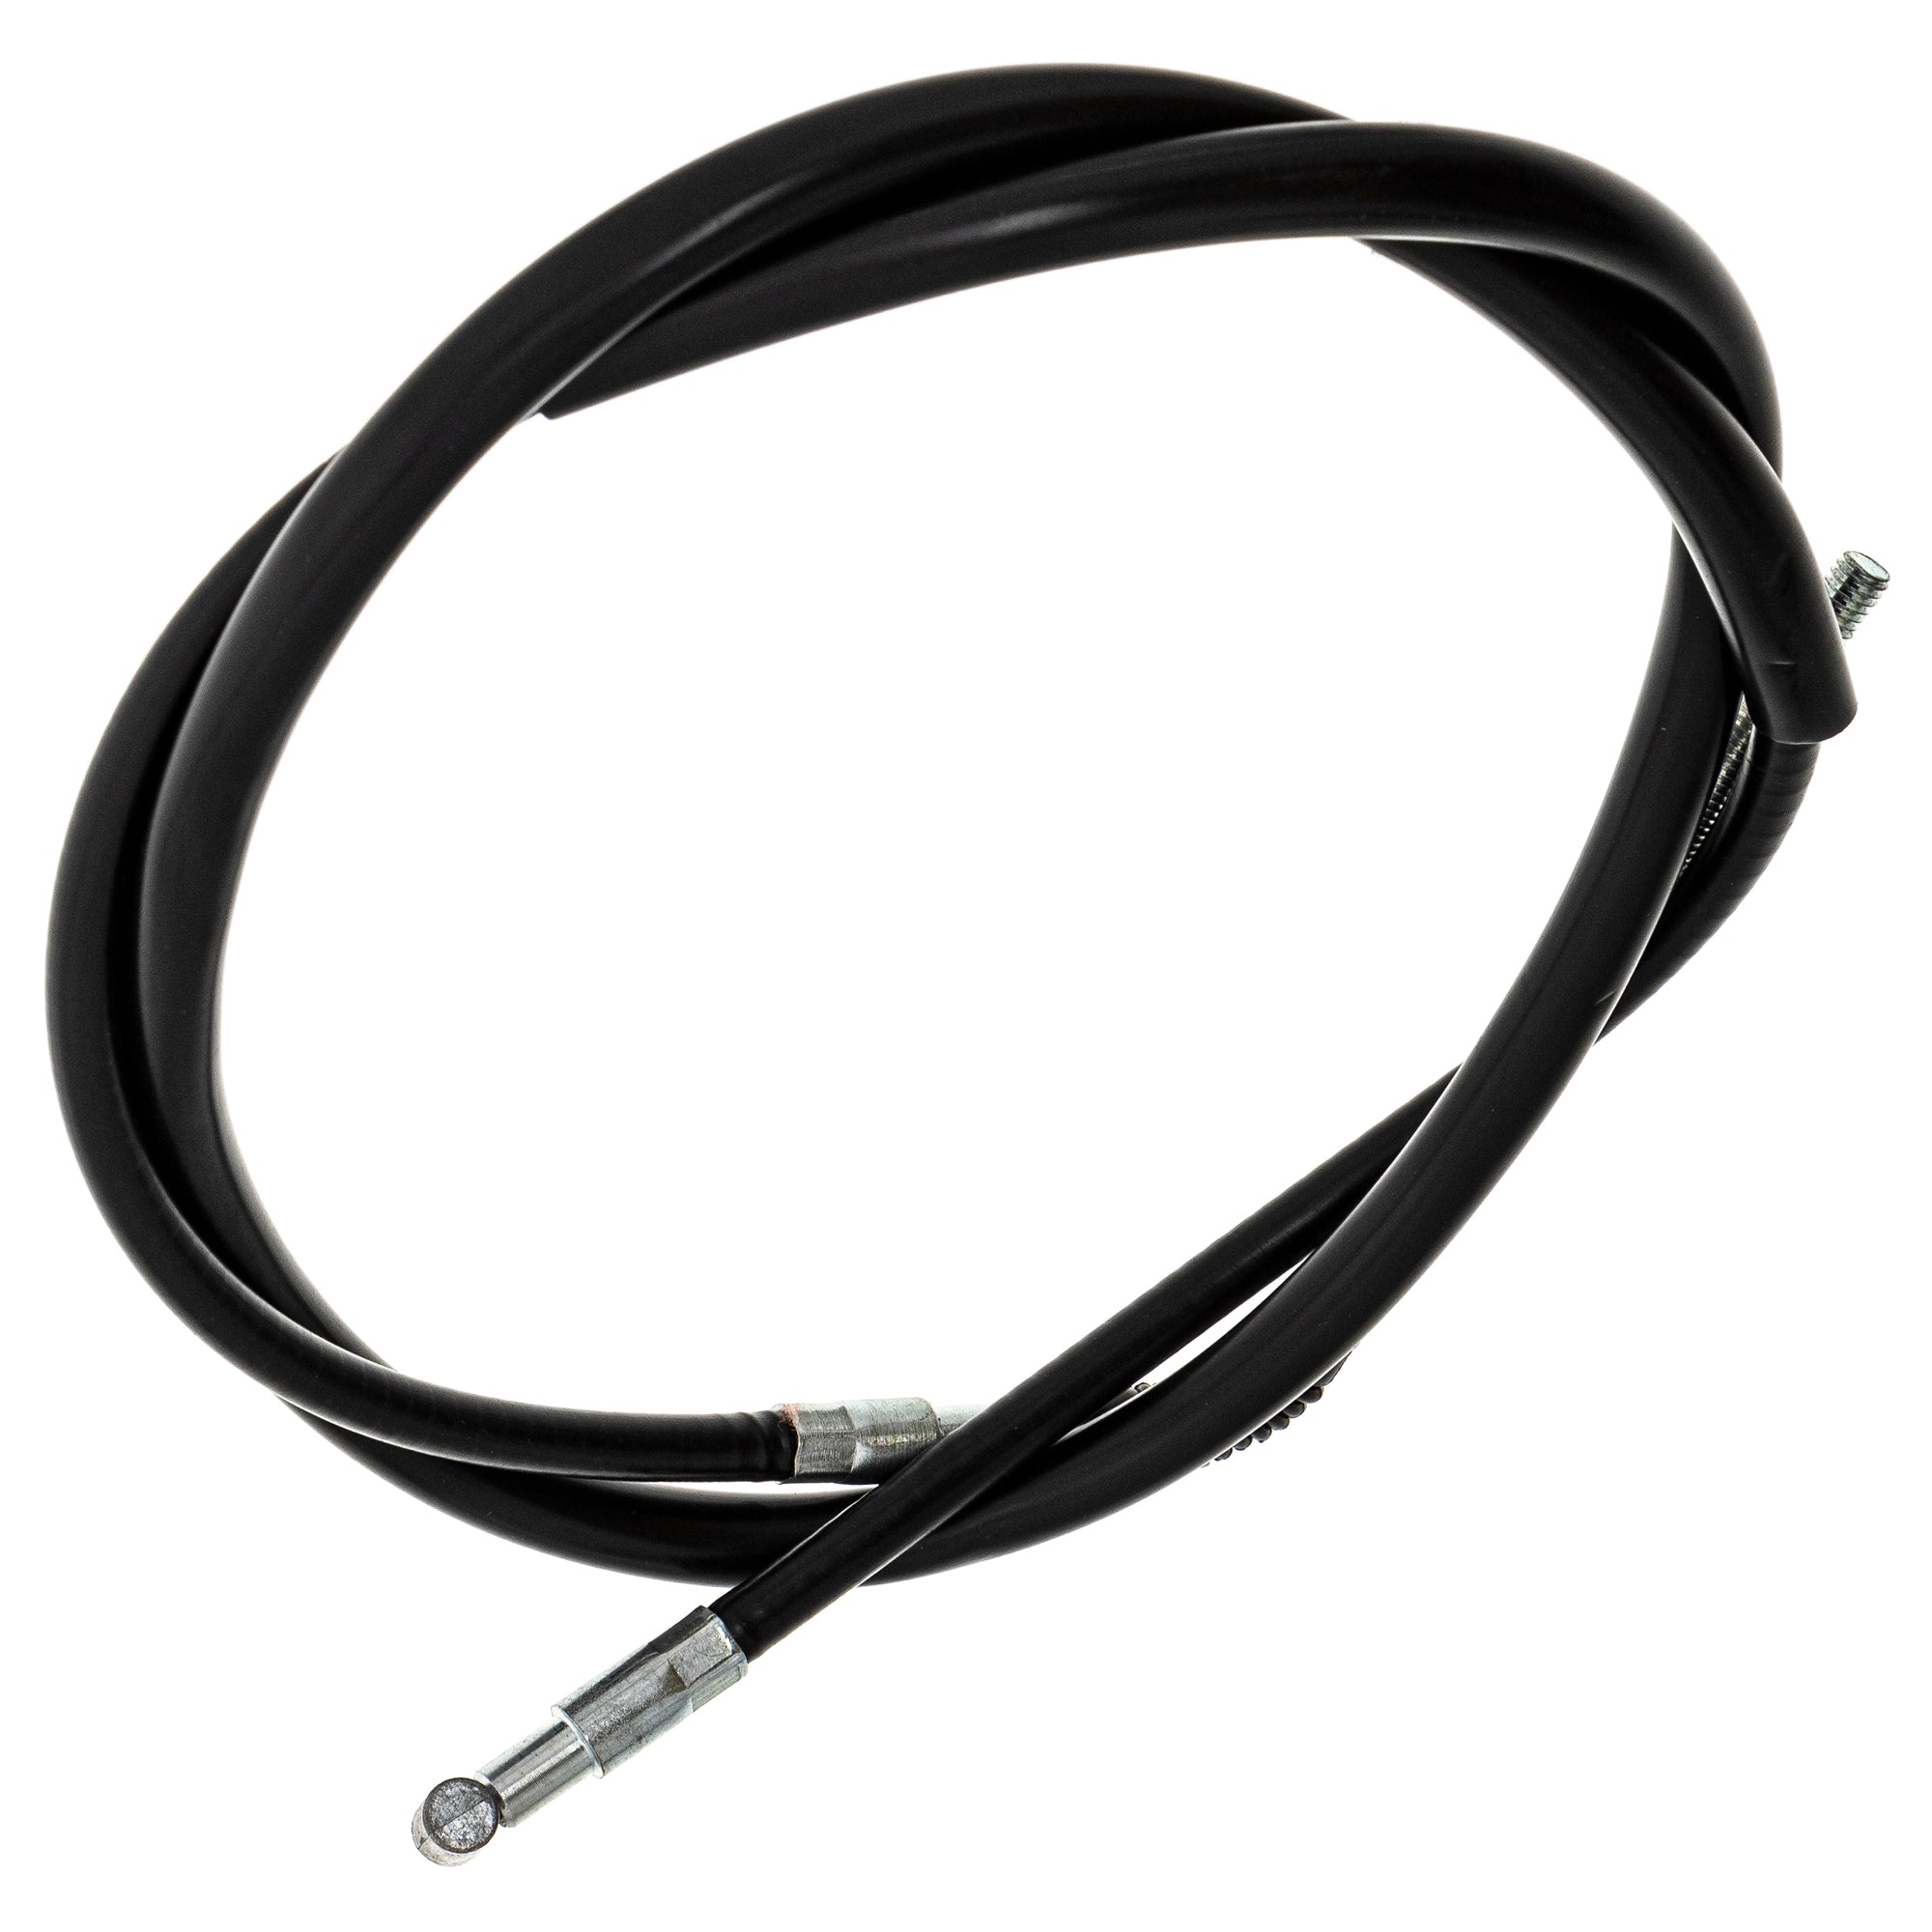 Rear Brake Cable for Honda ATC70 43460-957-003 ATV